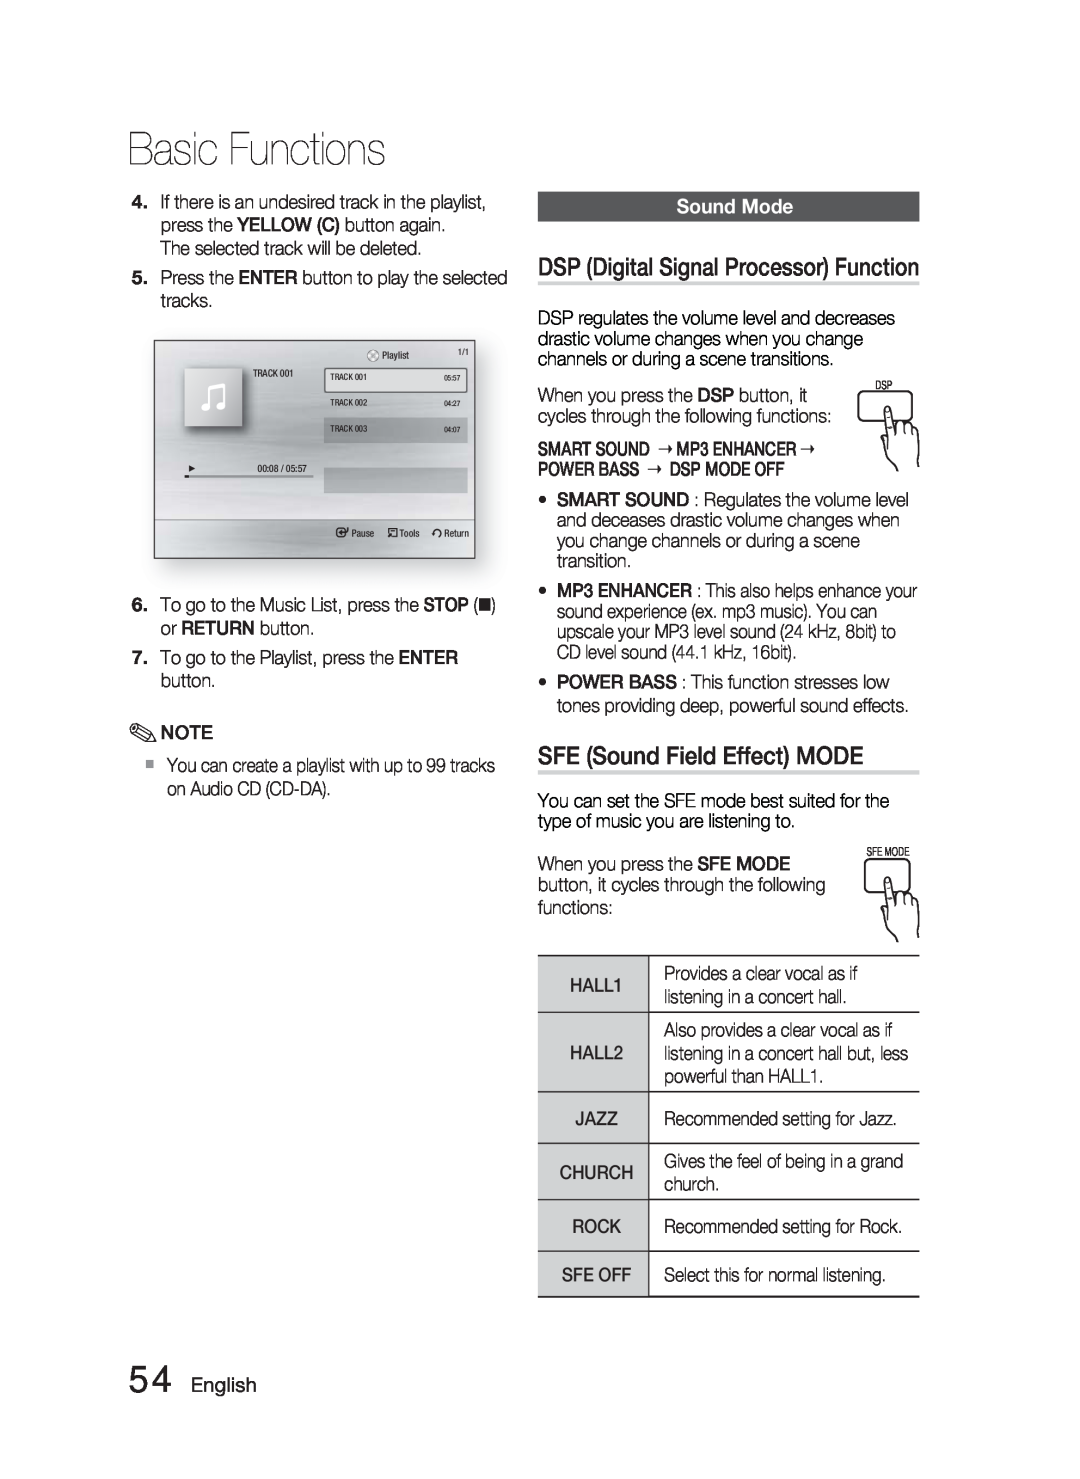 Samsung AH68-02279R user manual DSP Digital Signal Processor Function, SFE Sound Field Effect MODE, Sound Mode, English 